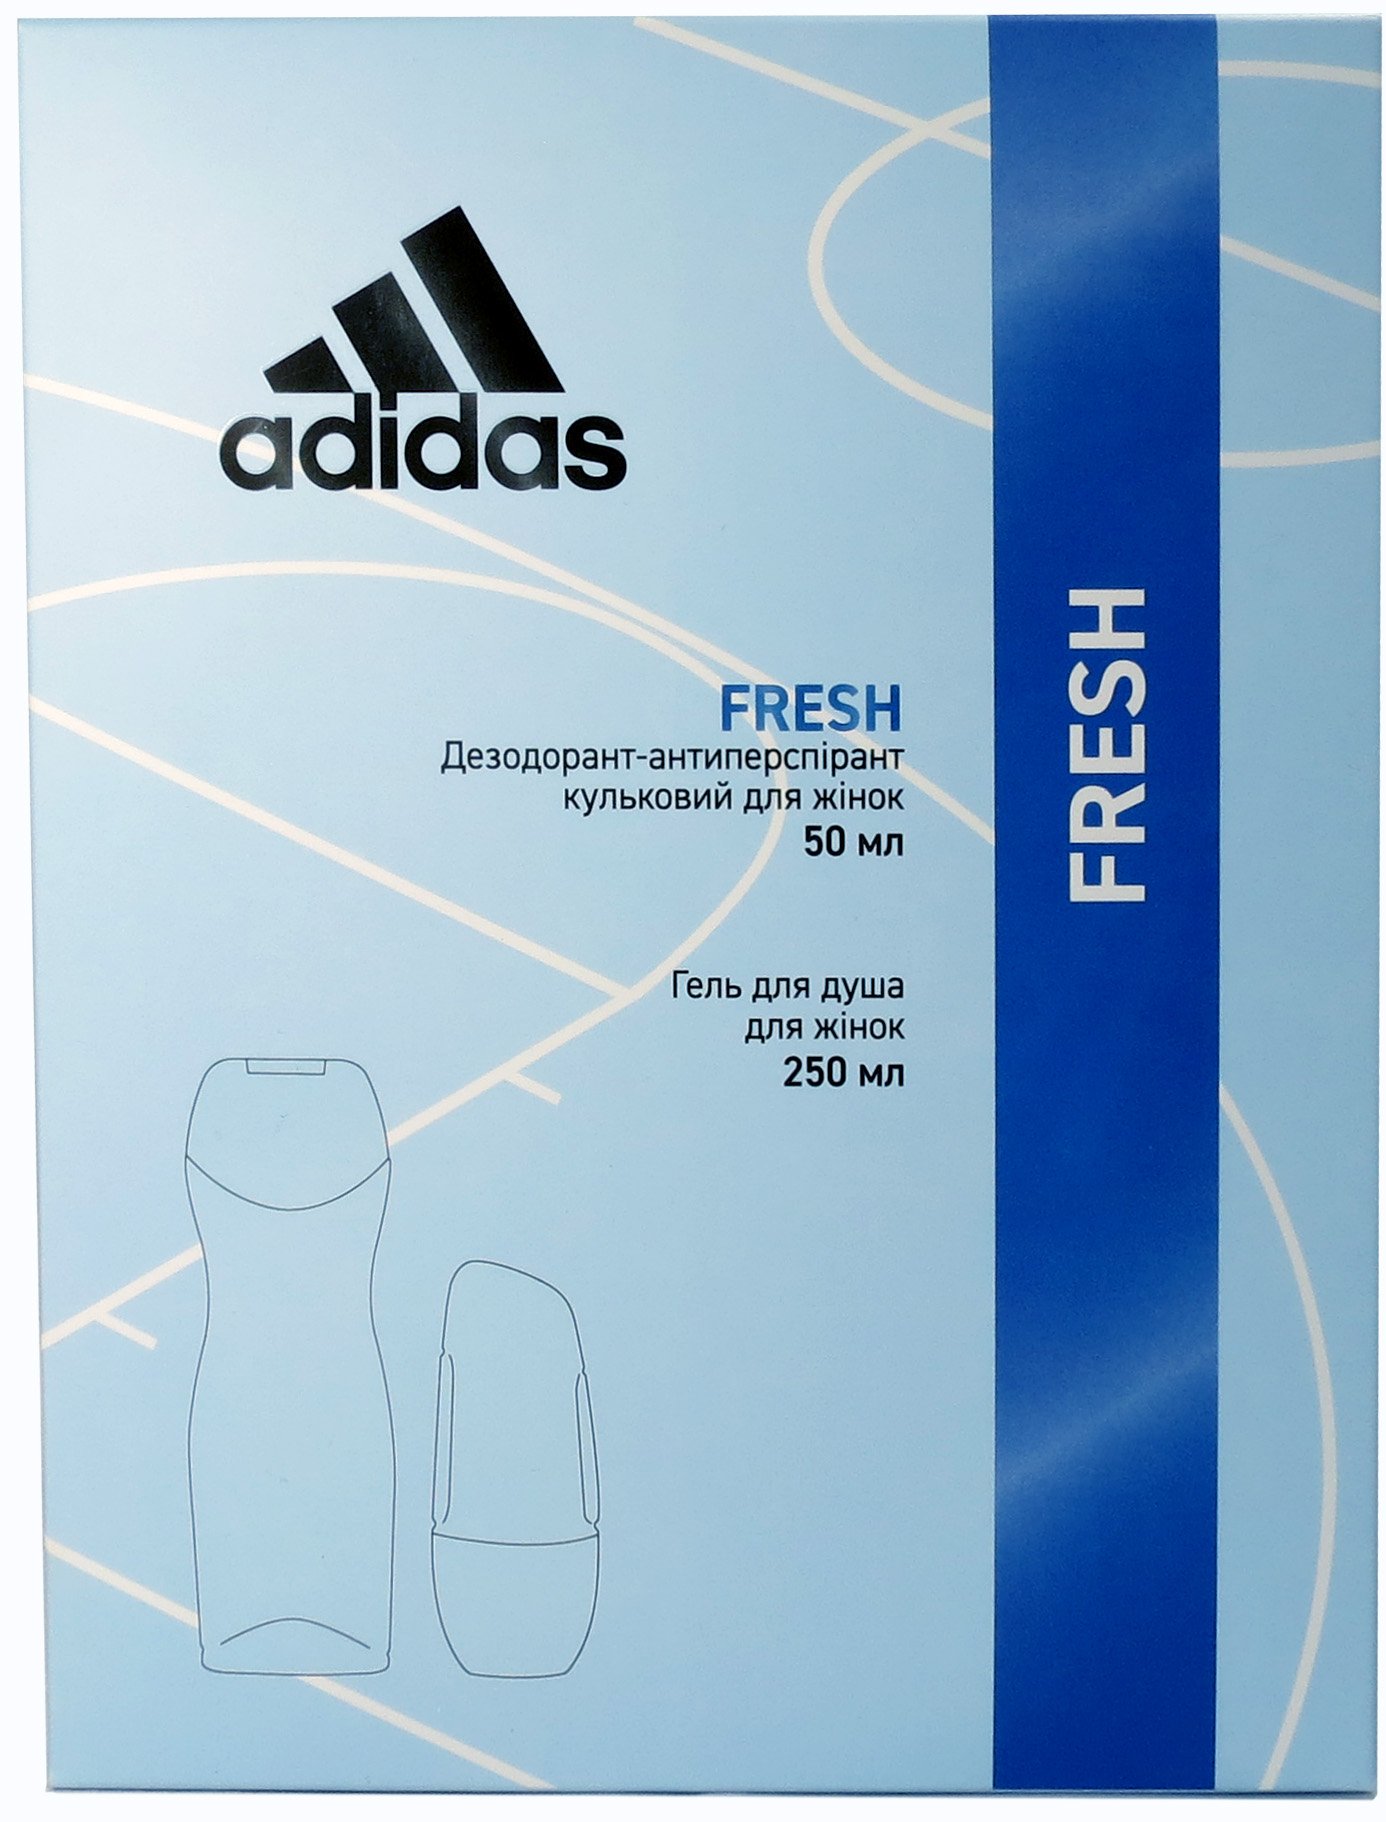 Набор для женщин Adidas 2020 Дезодорант-антиперспирант Fresh, 50 мл + Гель для душа, 250 мл - фото 2